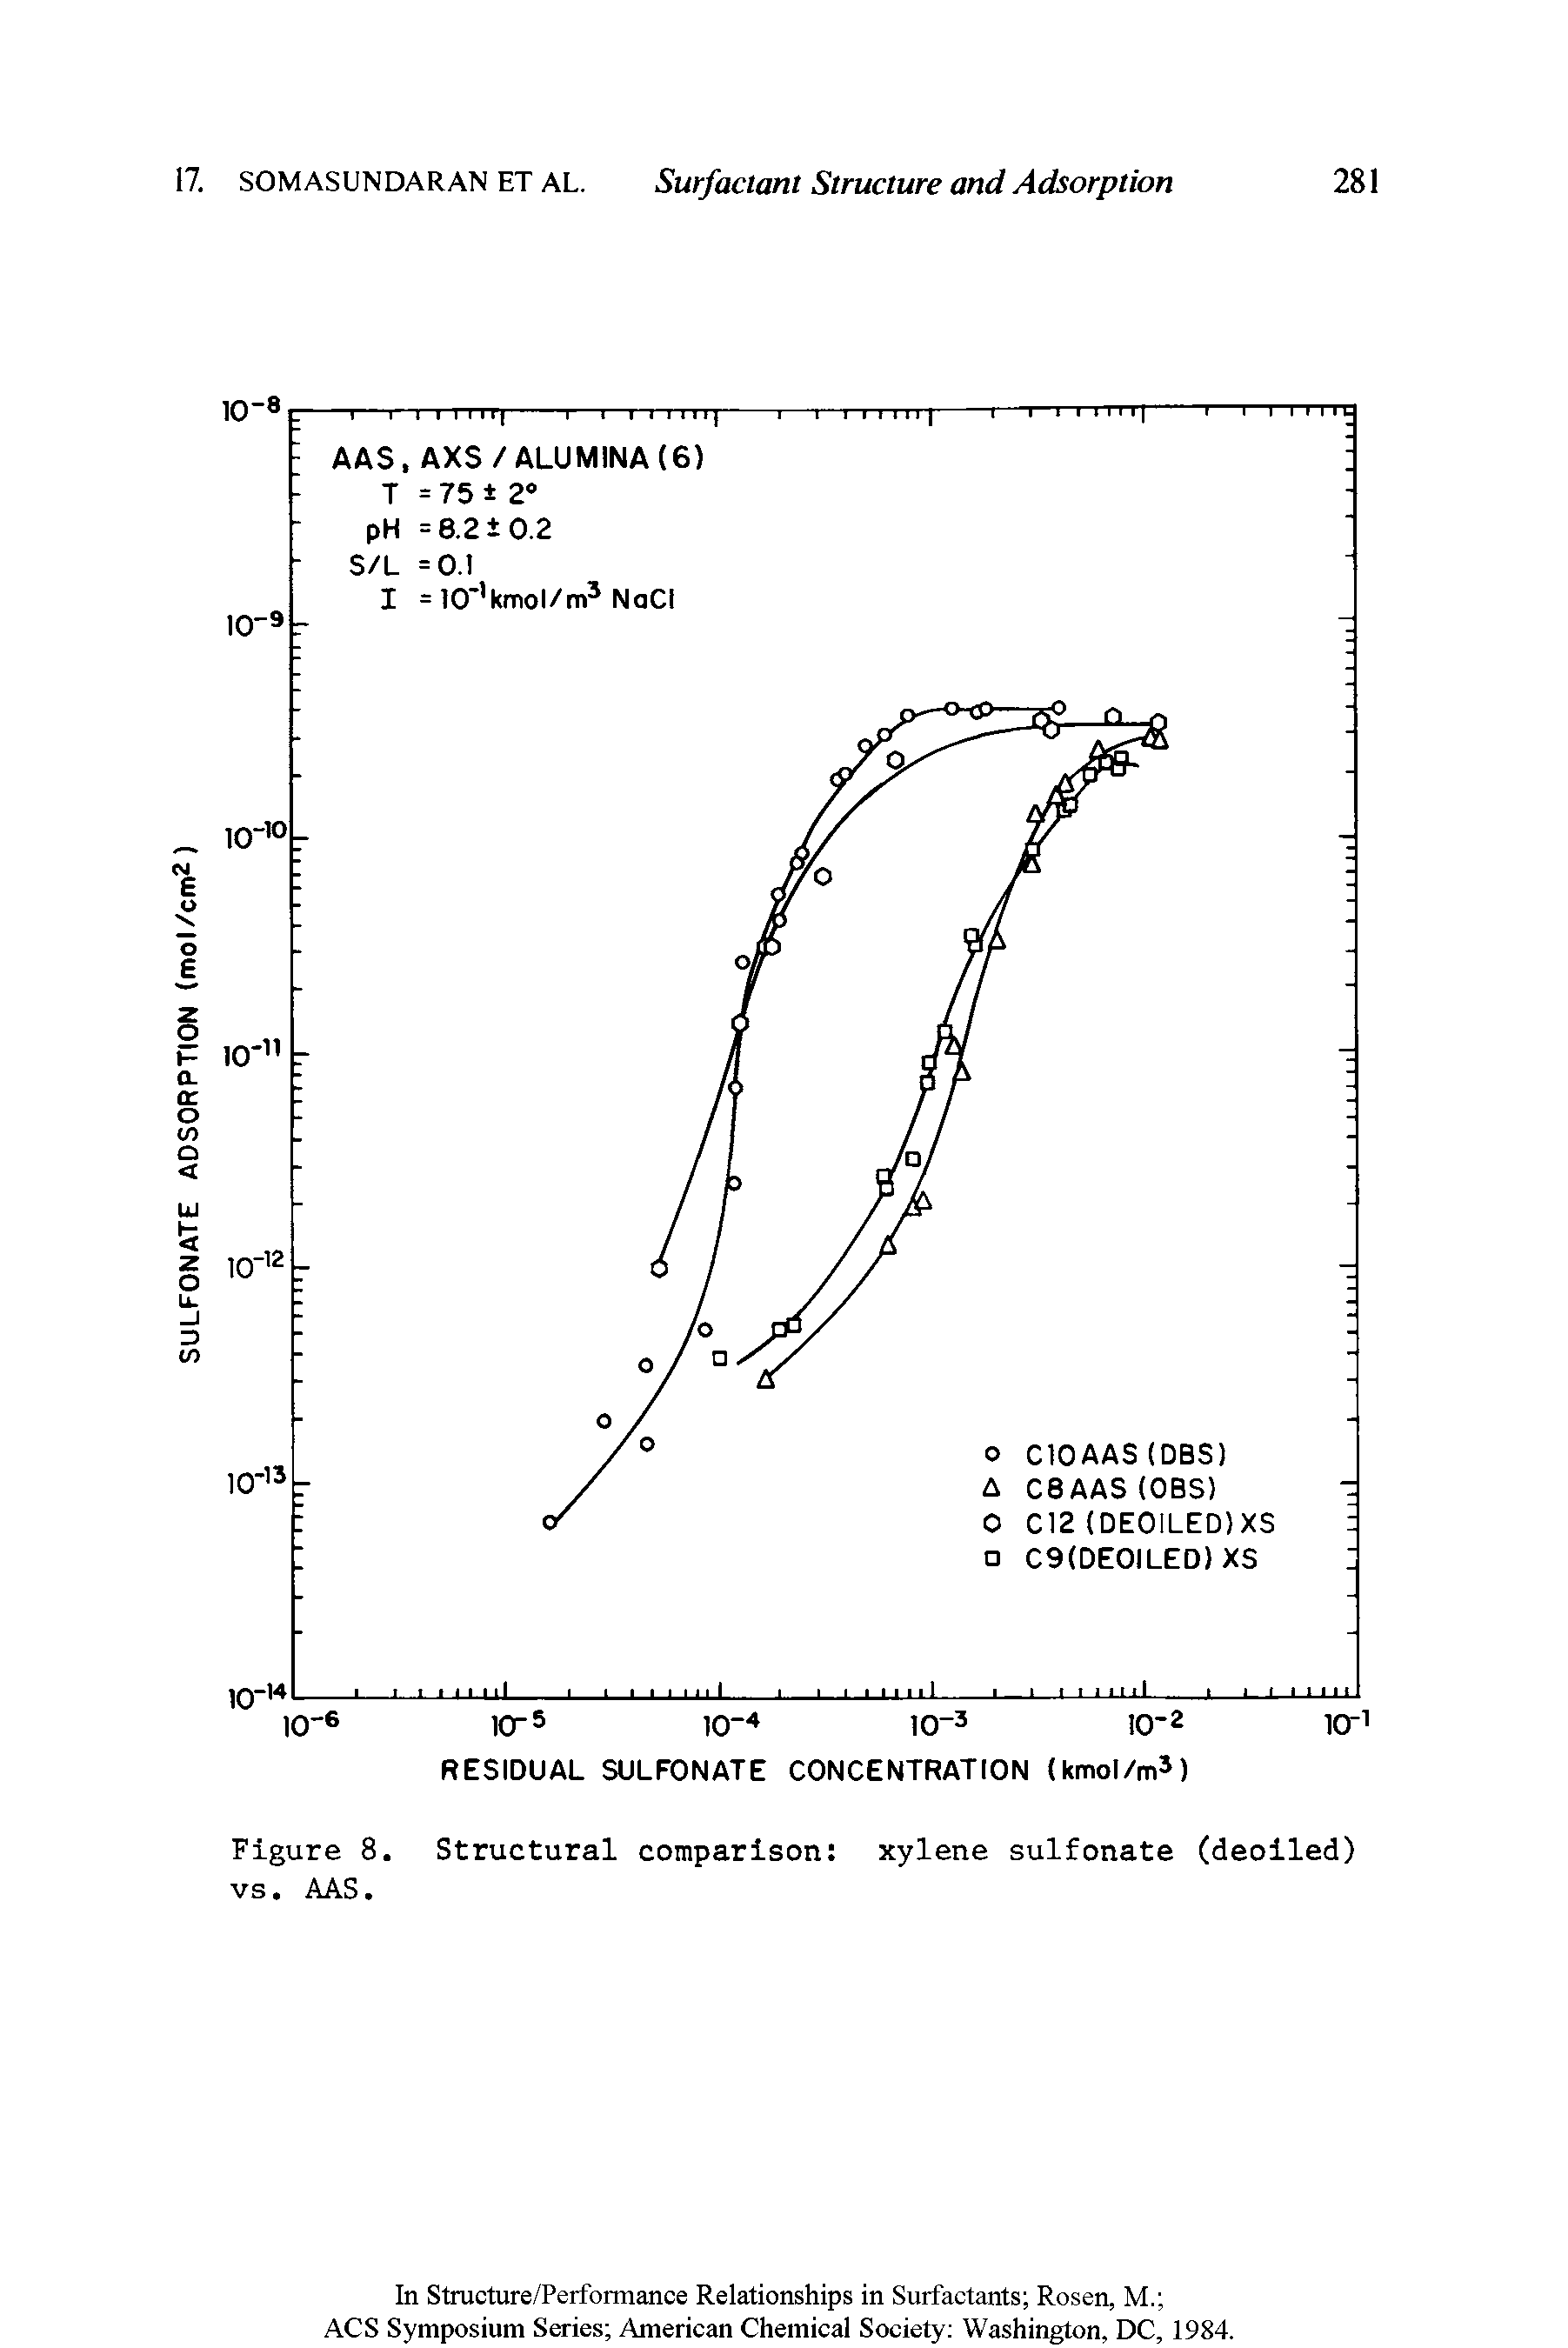 Figure 8. Structural comparison xylene sulfonate (deoiled) vs. AAS.